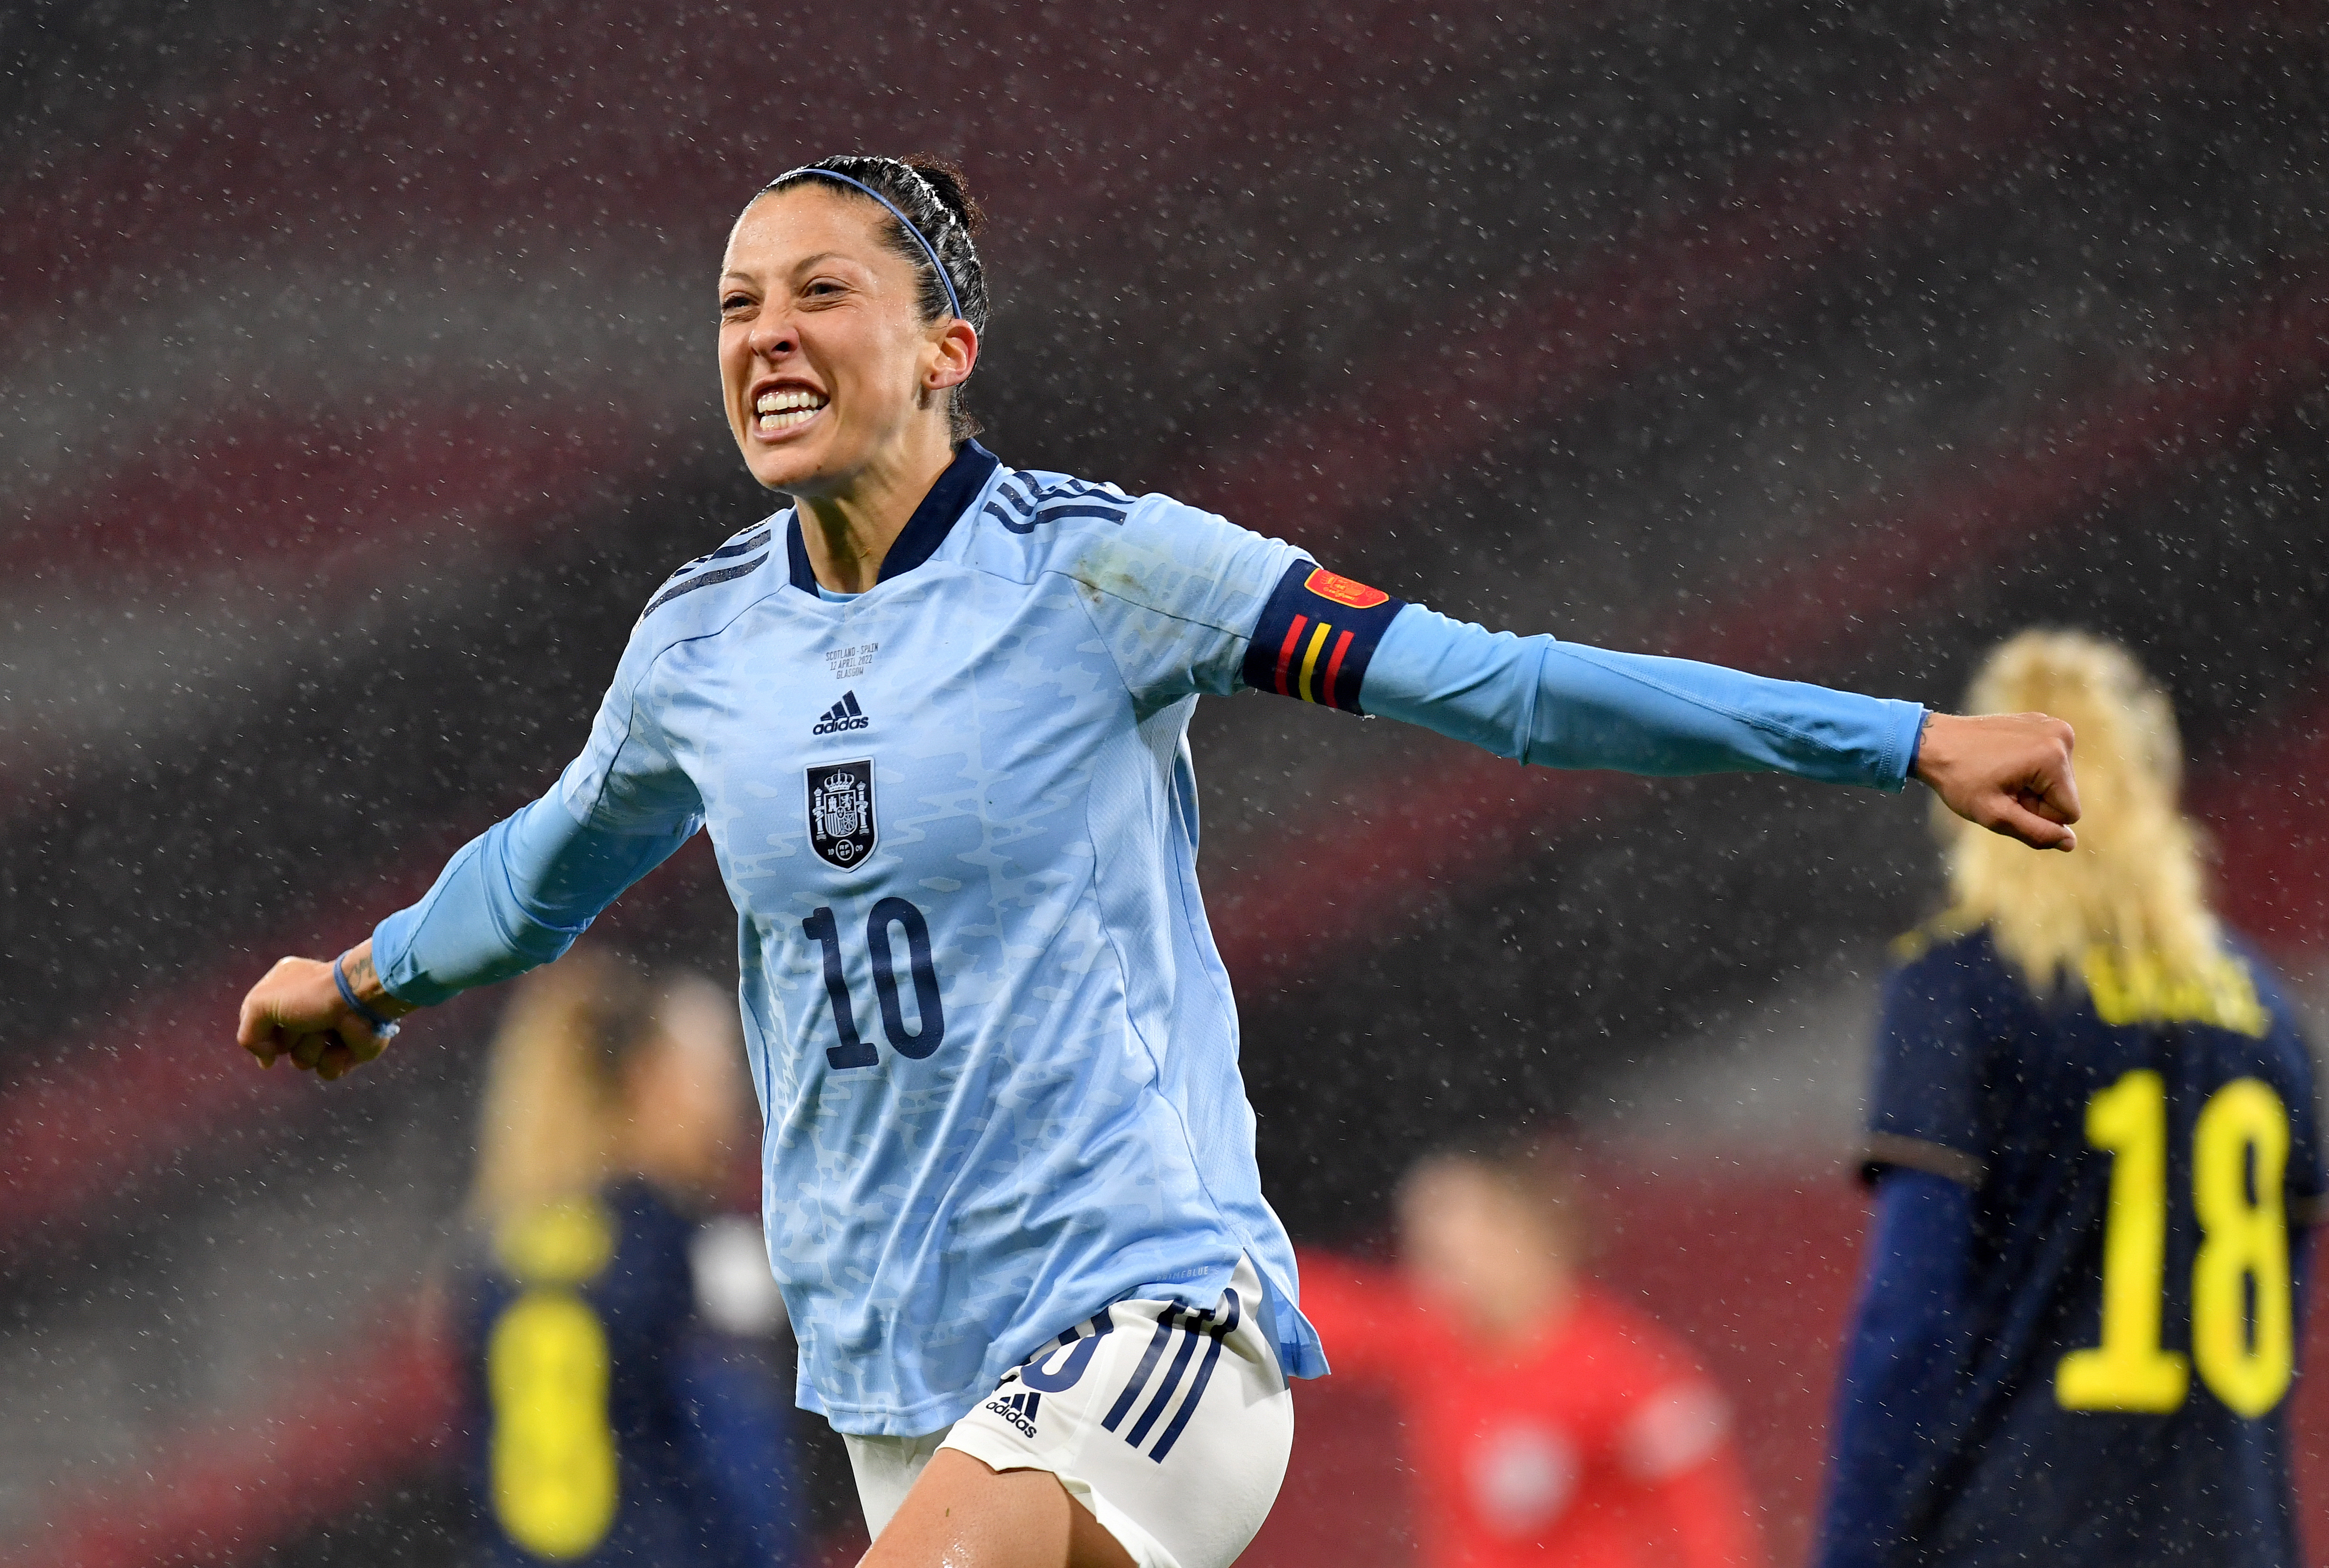 Jenni Hermoso celebrates one of her goals against Scotland